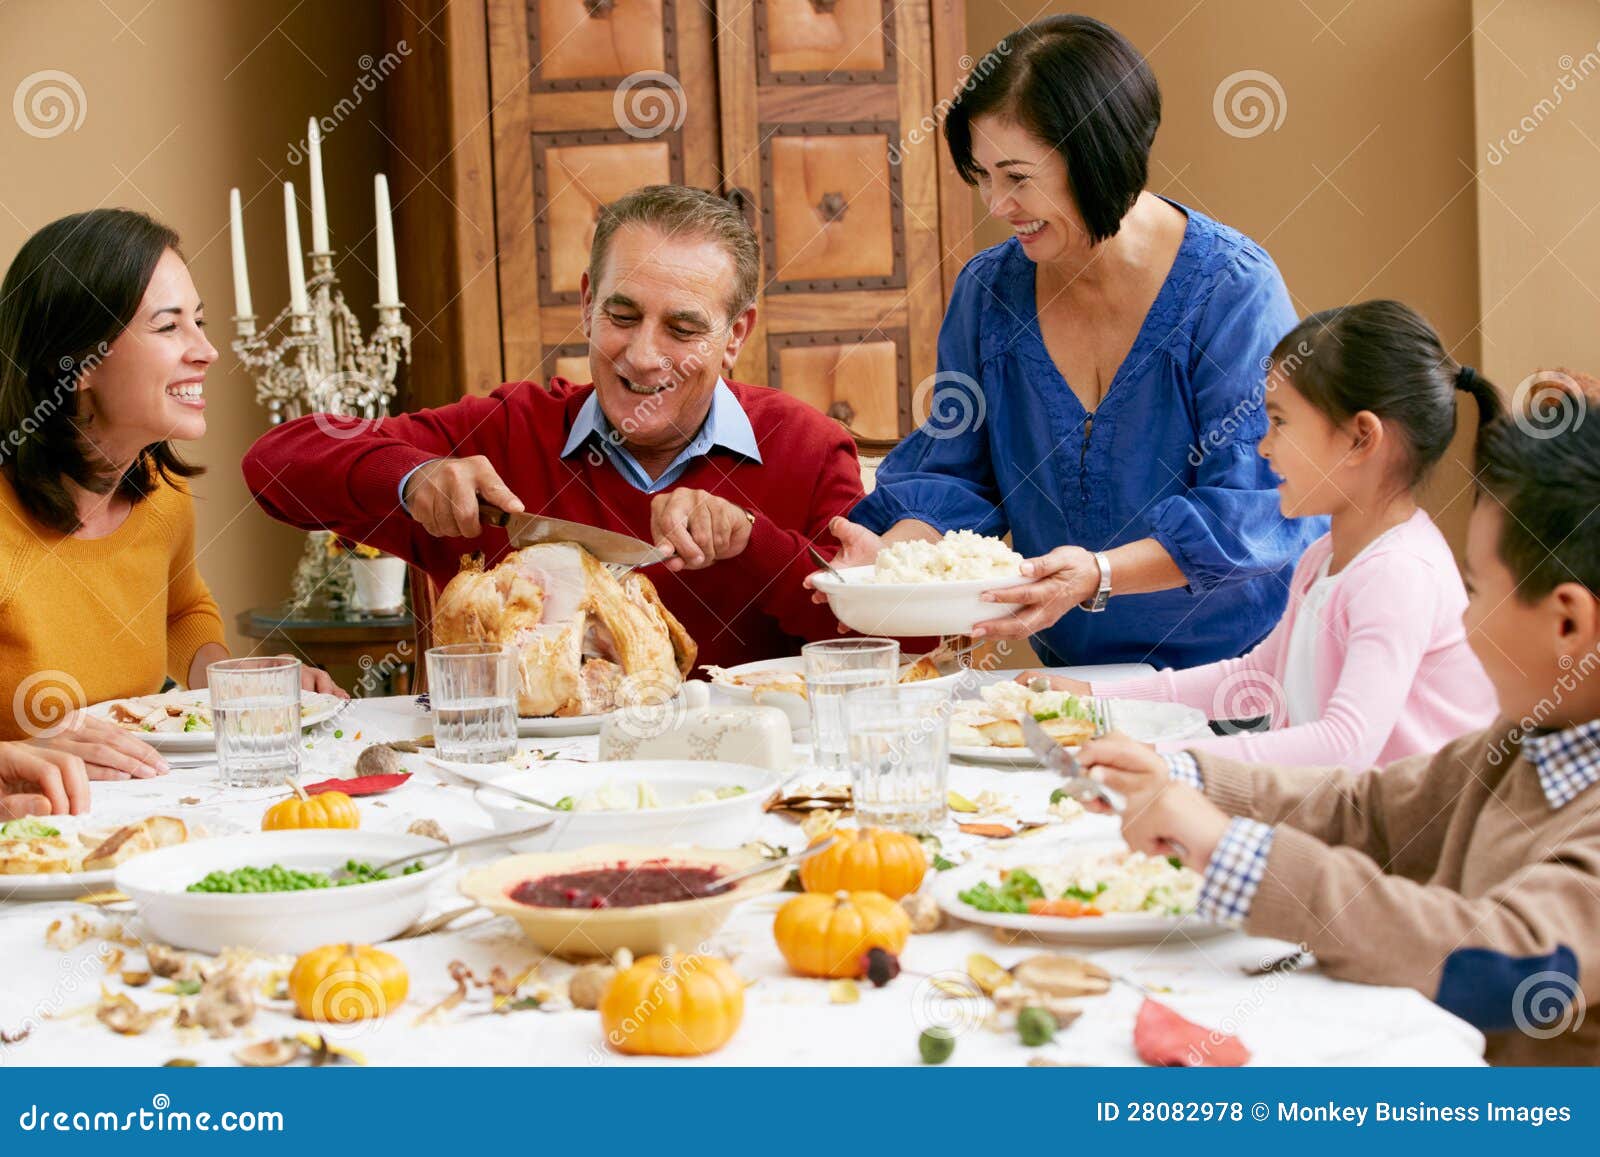 Multi Generation Family Celebrating Thanksgiving Stock Photo - Image of ...